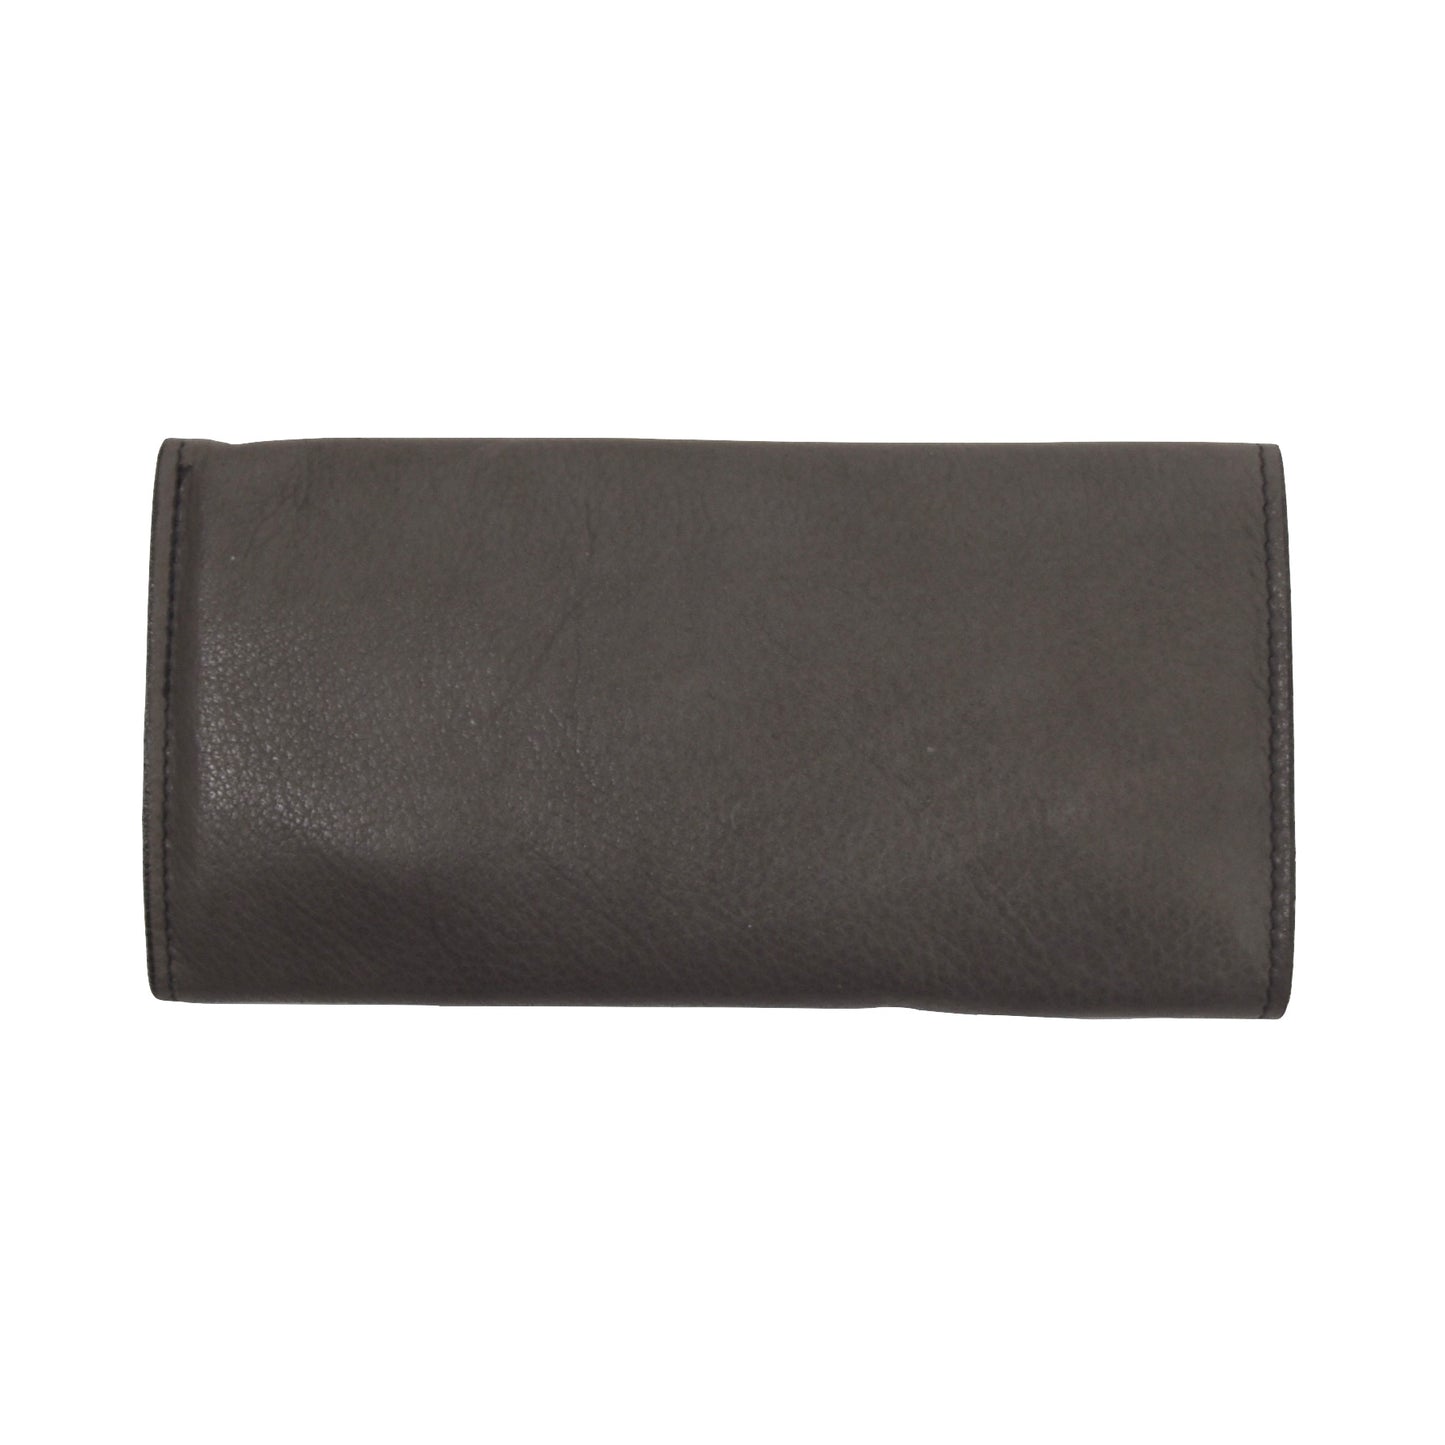 Niegeloh Topinox 4 Piece Manicure Set + Leather Case